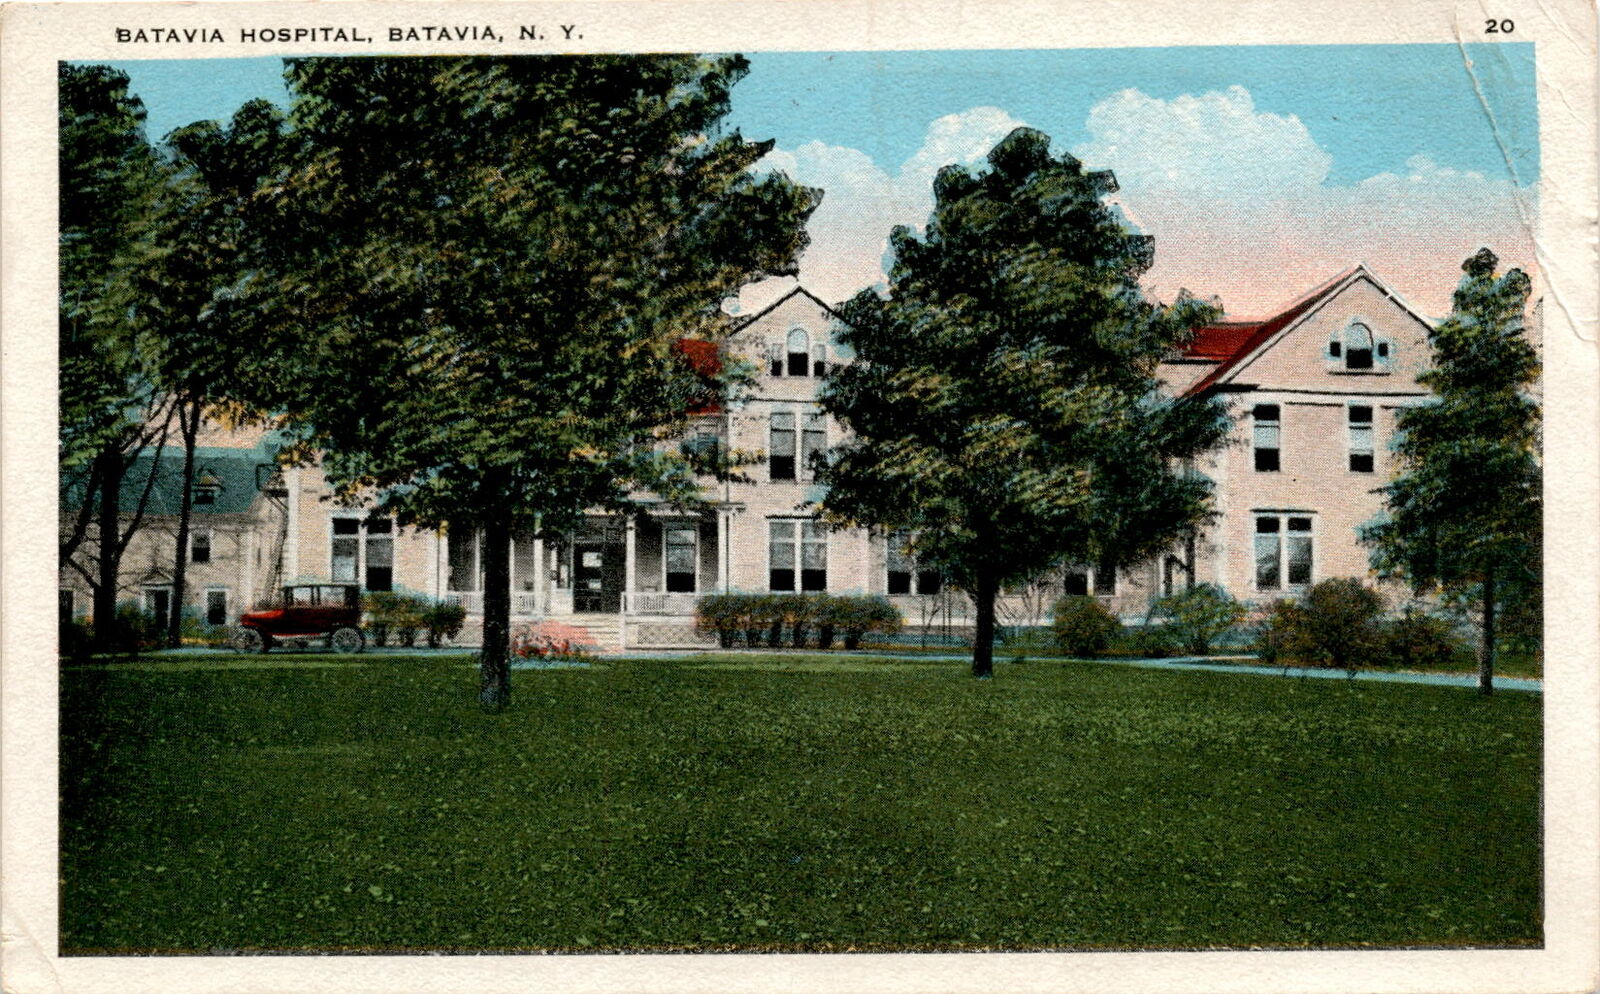 Vintage Batavia Hospital postcard, founded by local women.